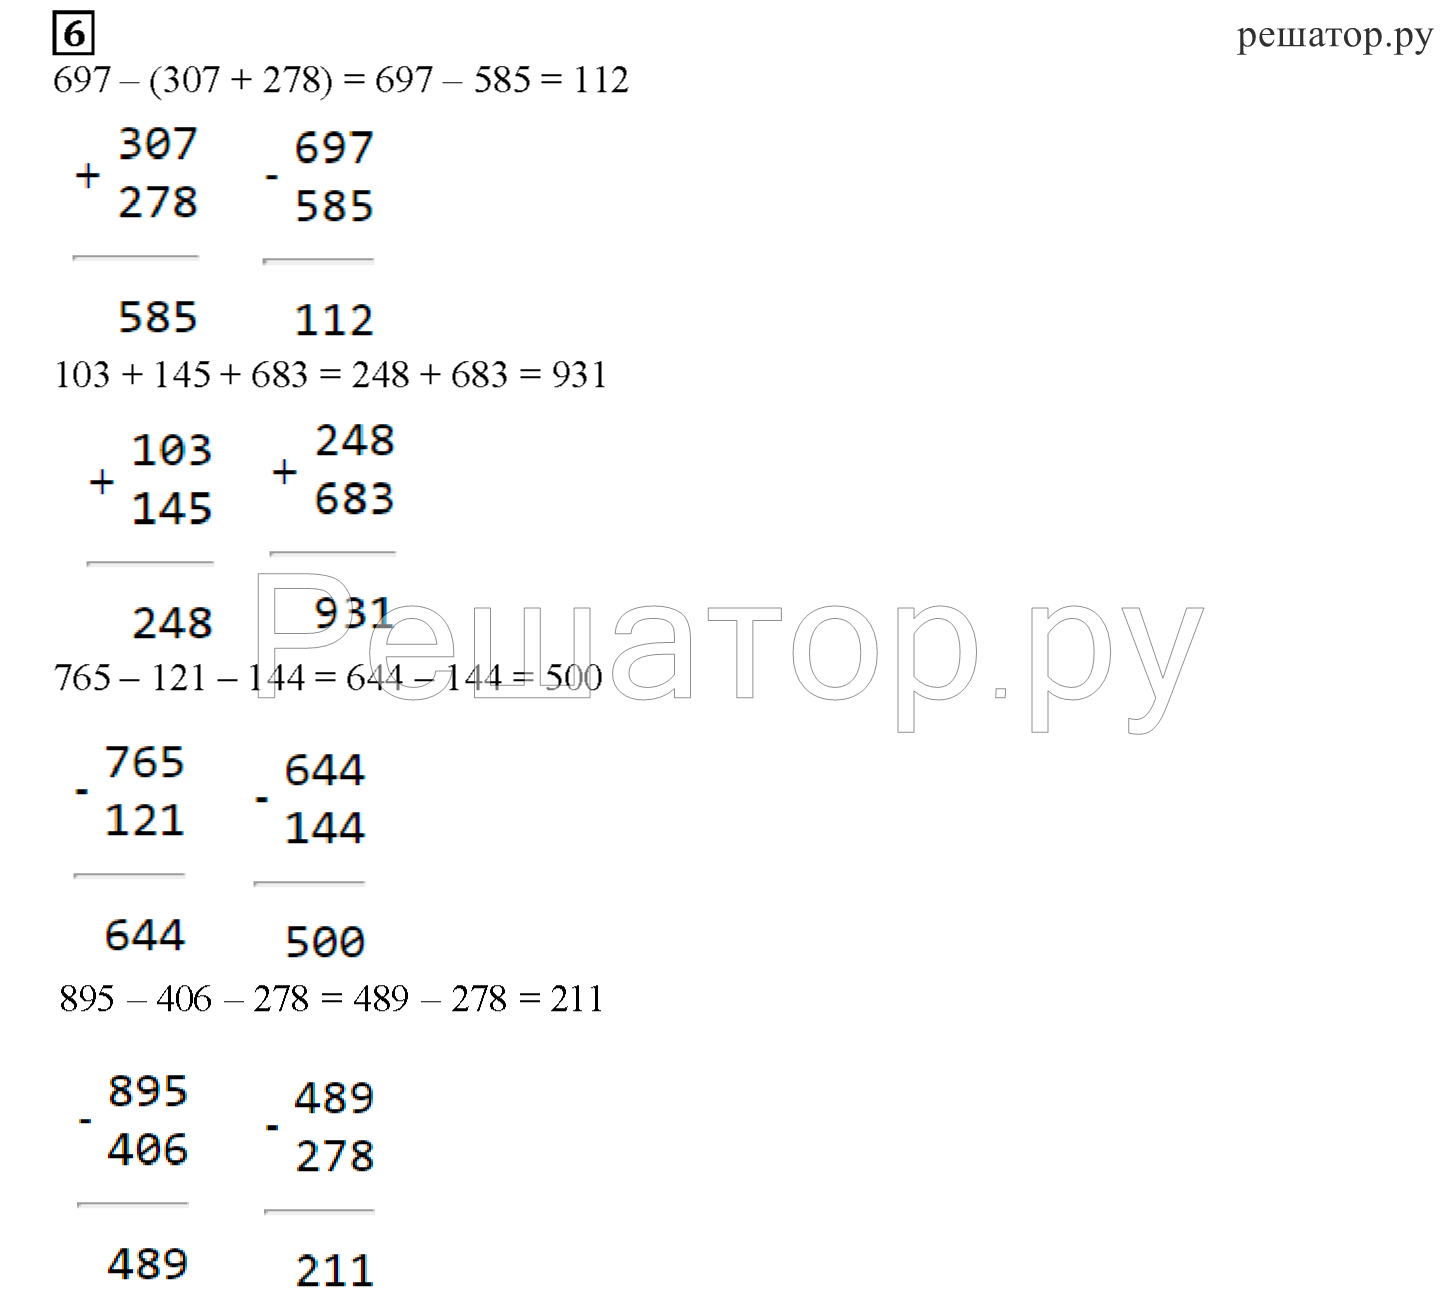 Решебник по математике 3 класс башмаков нефедова. Найди неизвестное 307+278+ х 697.